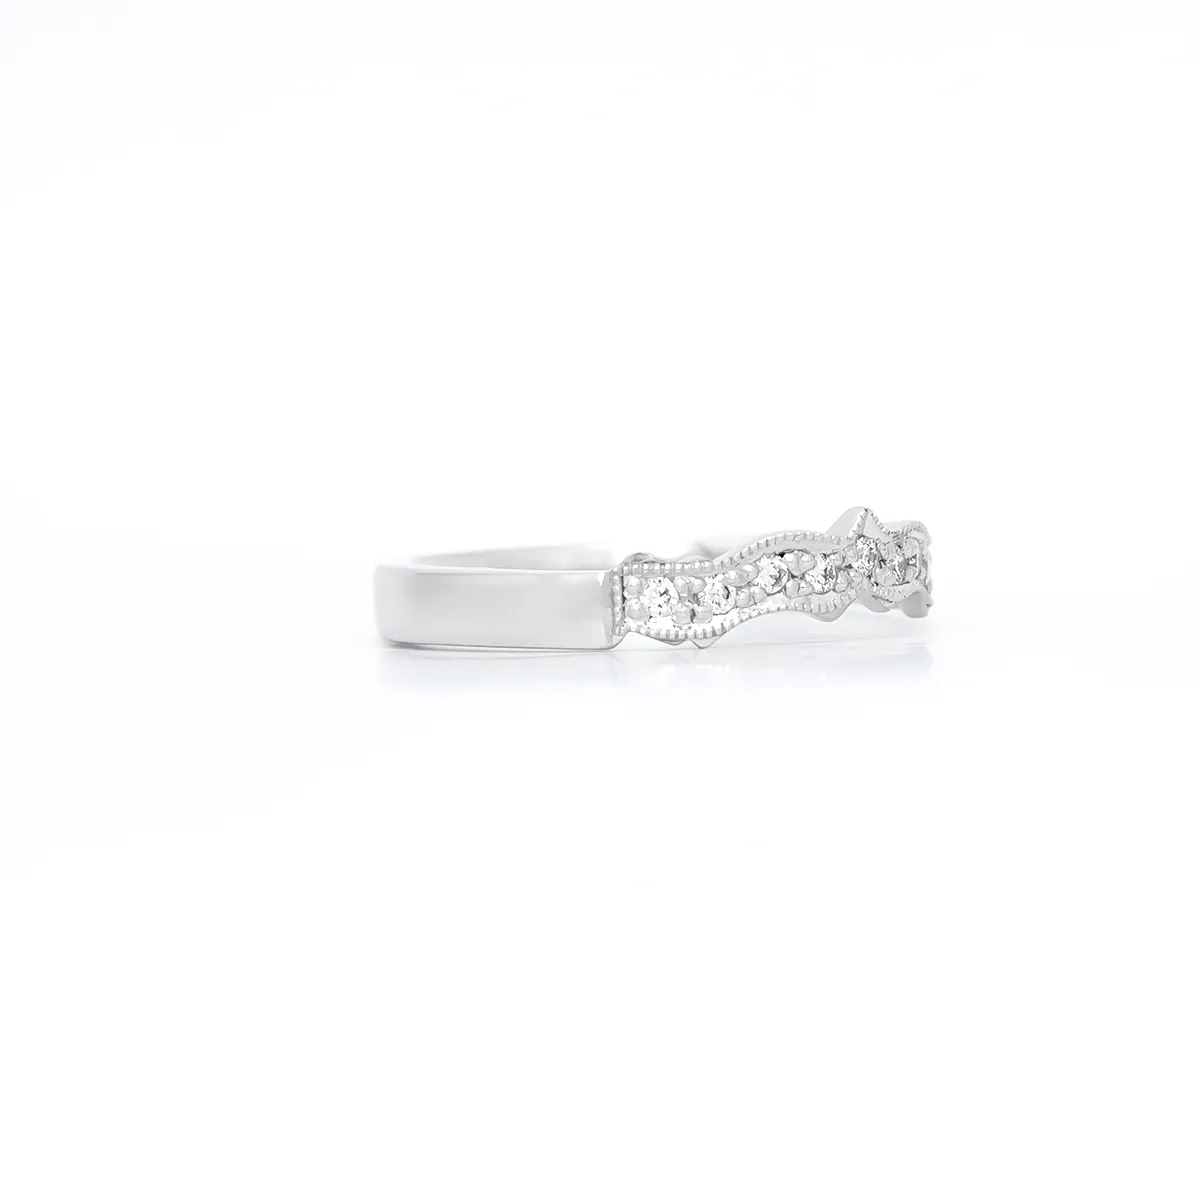 IJCR00028 Claddagh Wedding Ring White Gold Diamond 3